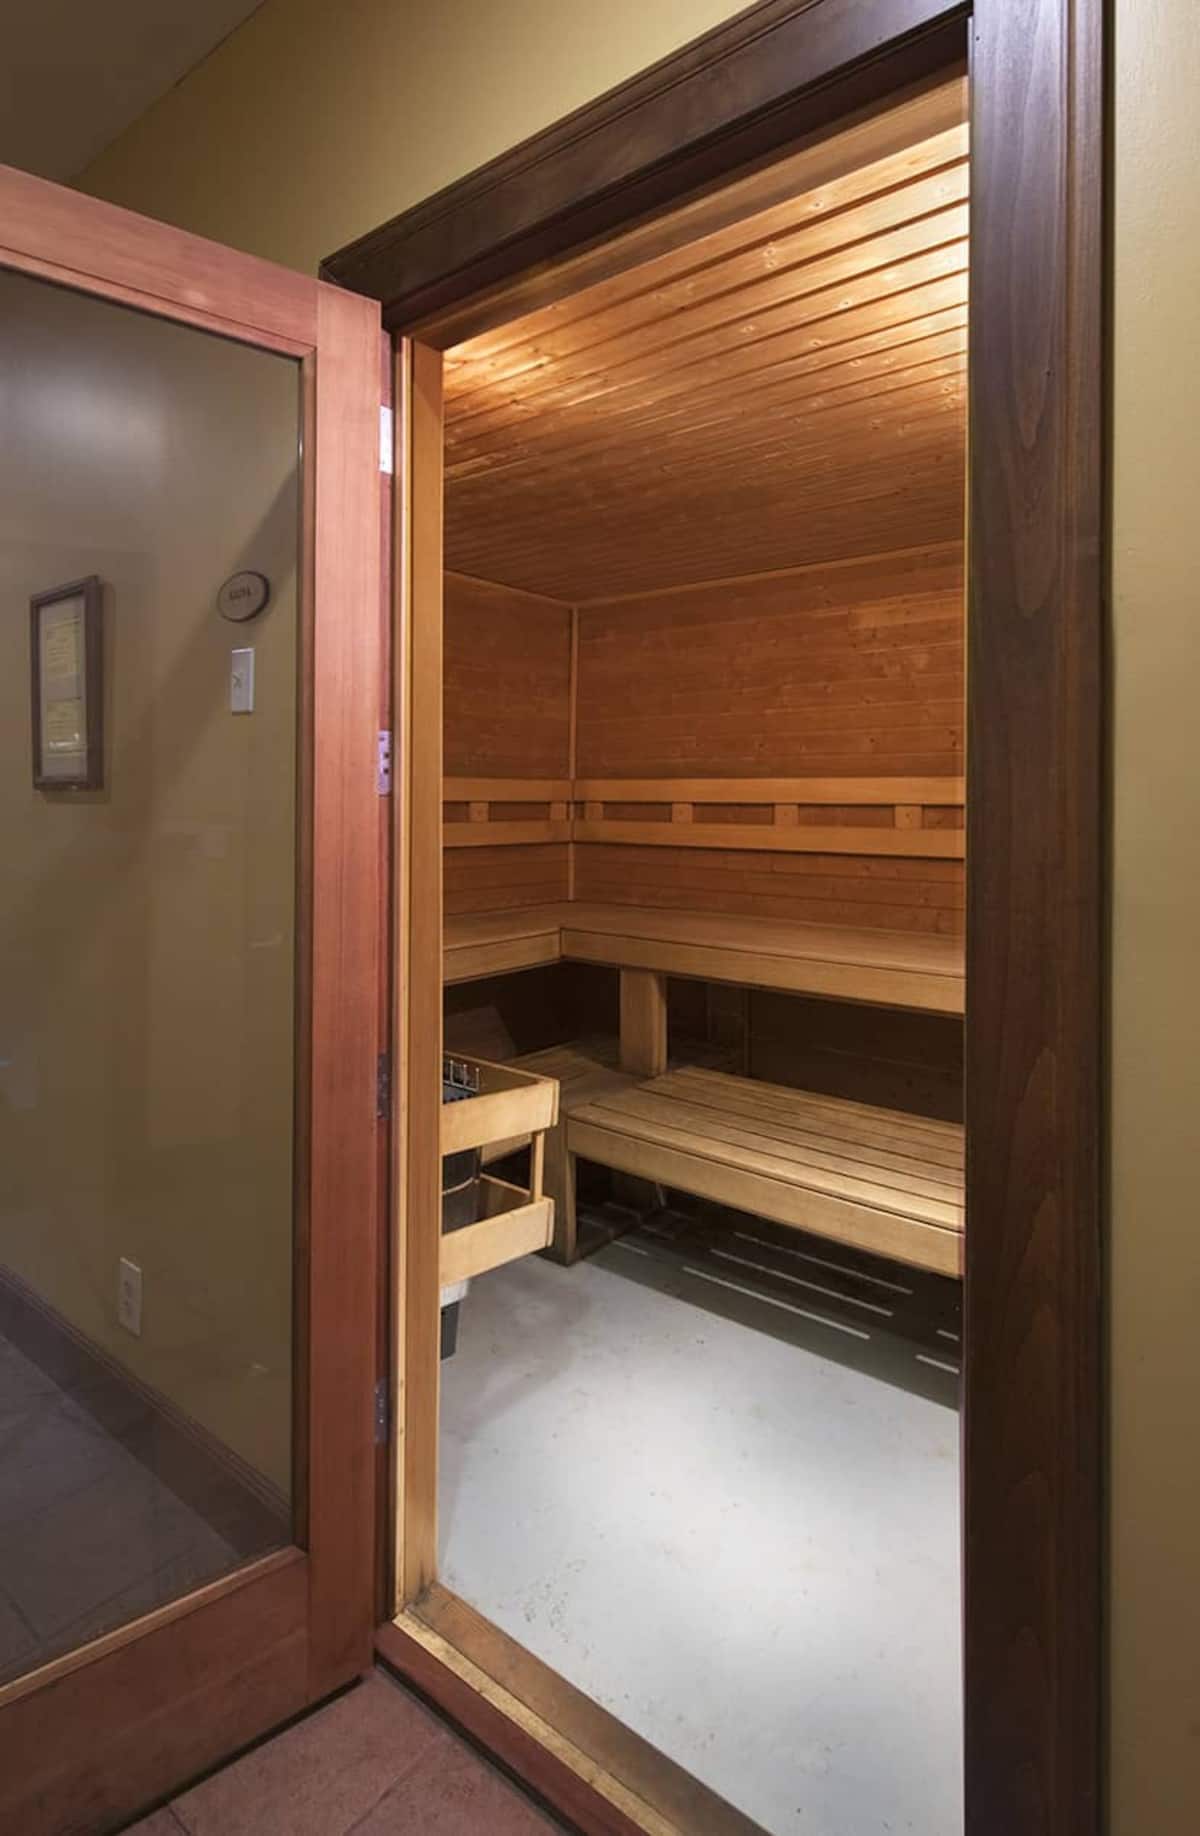 , an Airbnb-friendly apartment in Everett, WA